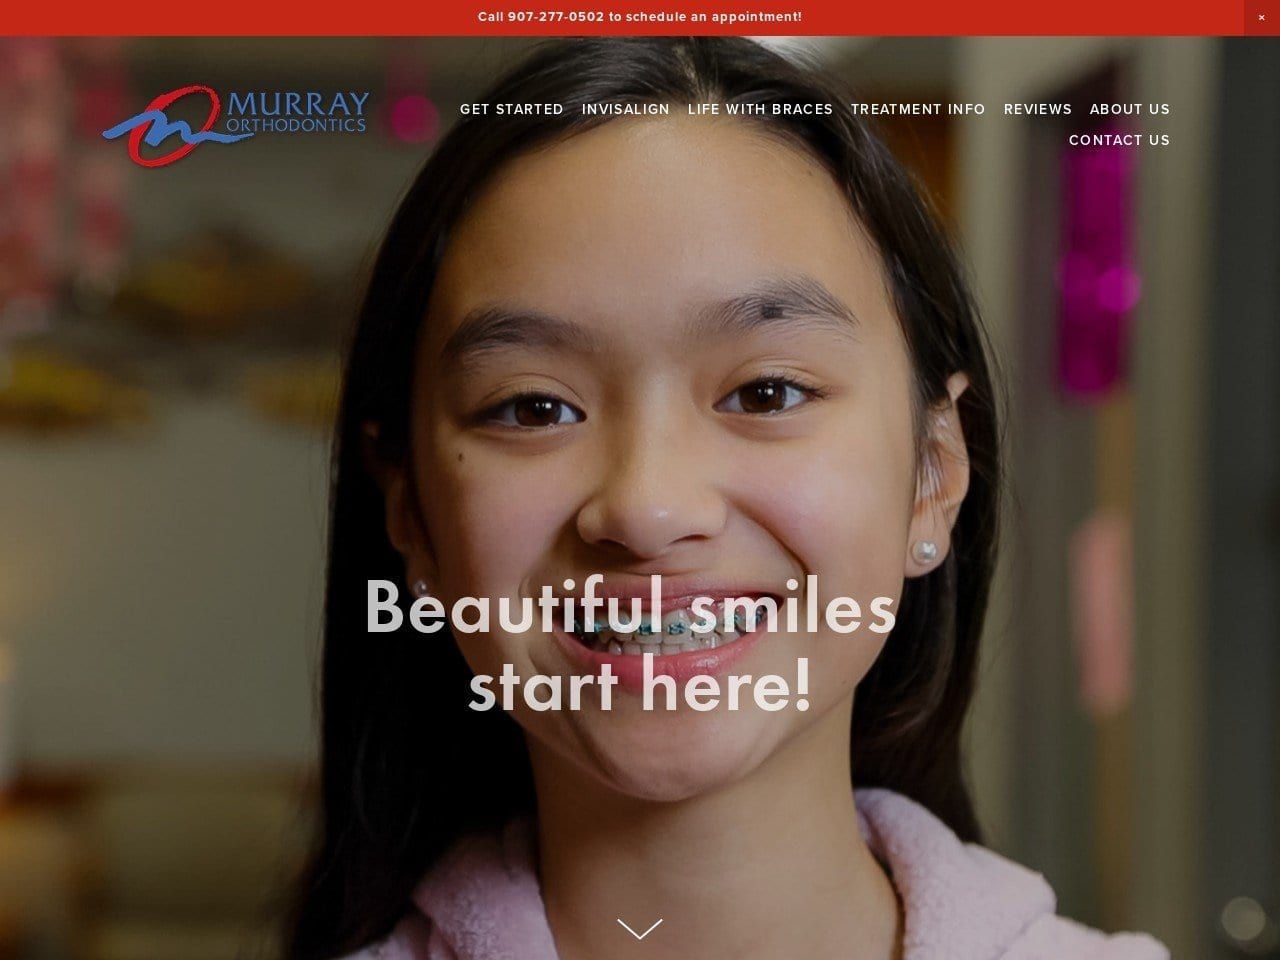 Murray Orthodontics Website Screenshot from murrayorthodontics.com